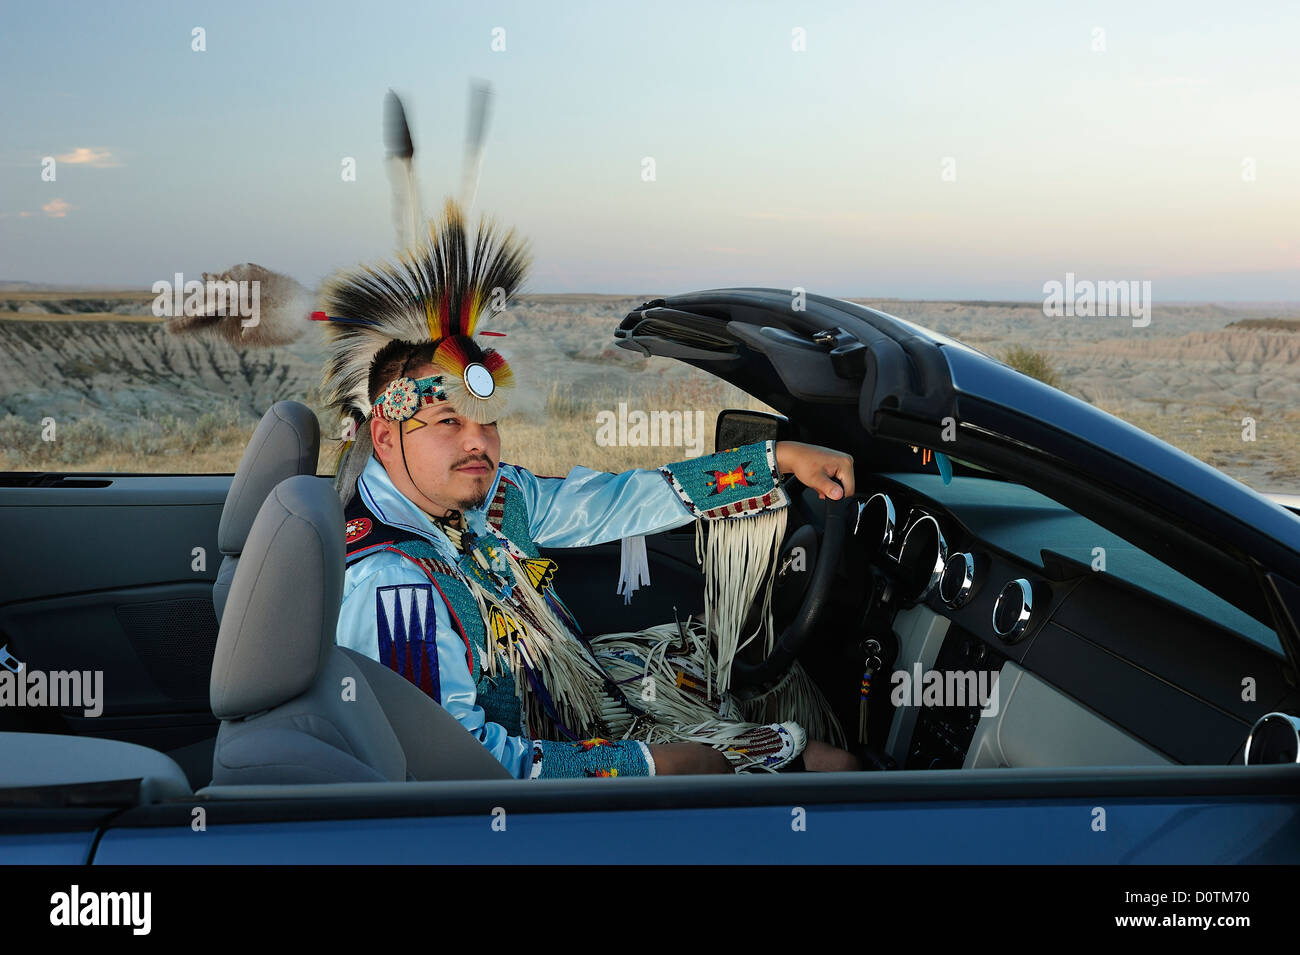 Sioux, Badlands, Stephen Yellowhawk, car, badland, warriors, feathers, regalia, American Native, Lakota, South Dakota, USA, Unit Stock Photo